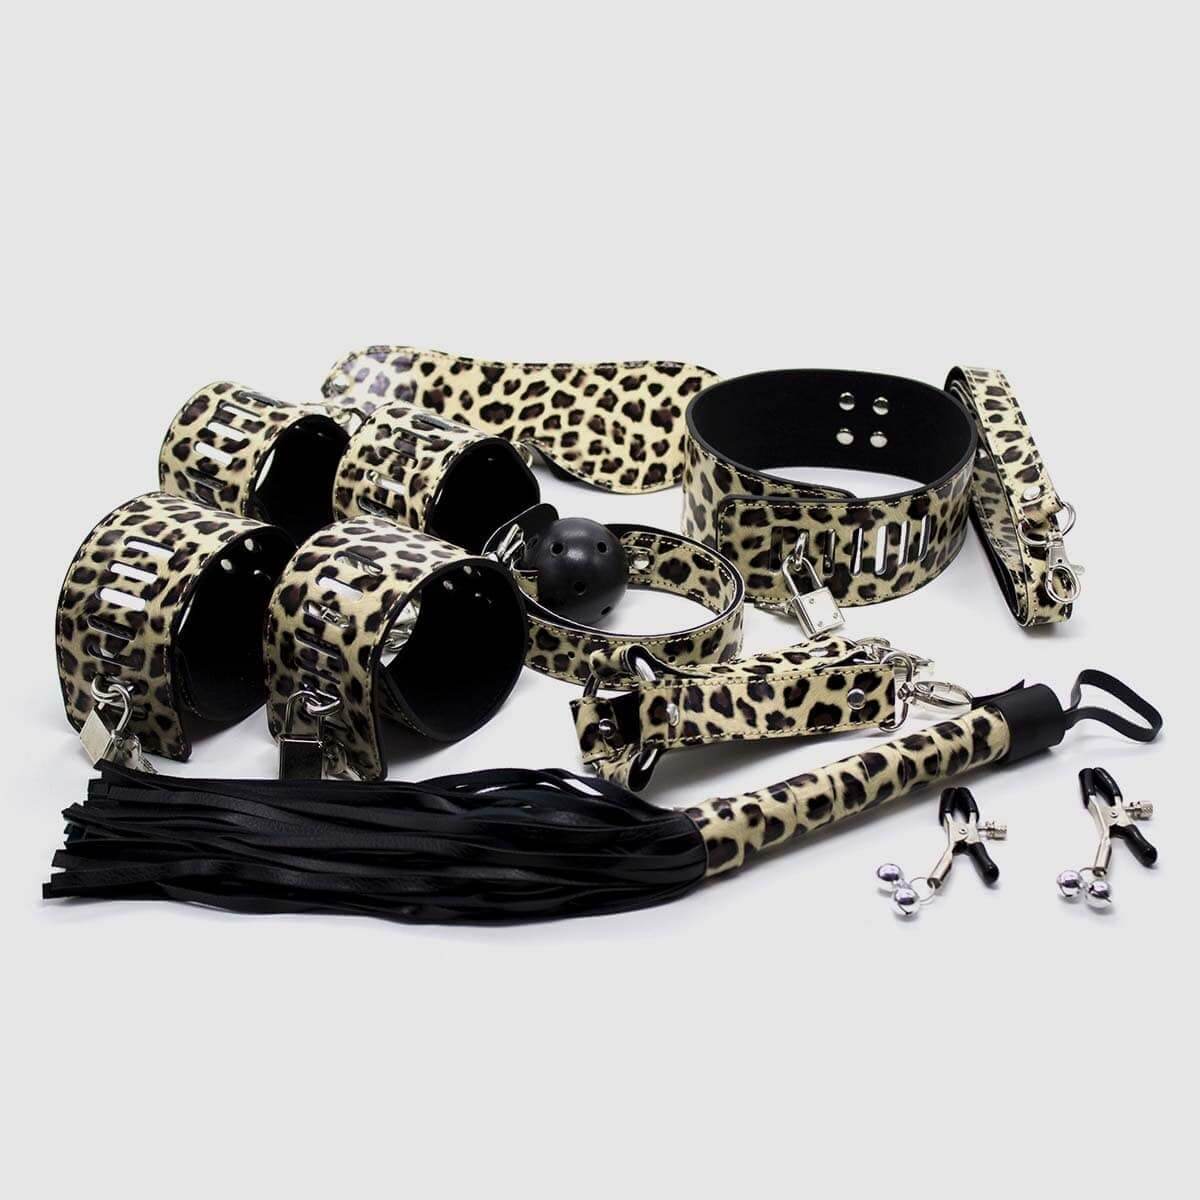 Leopard Print Bondage Restraints Kit - 8Pcs - Thorn & Feather Sex Toy Canada